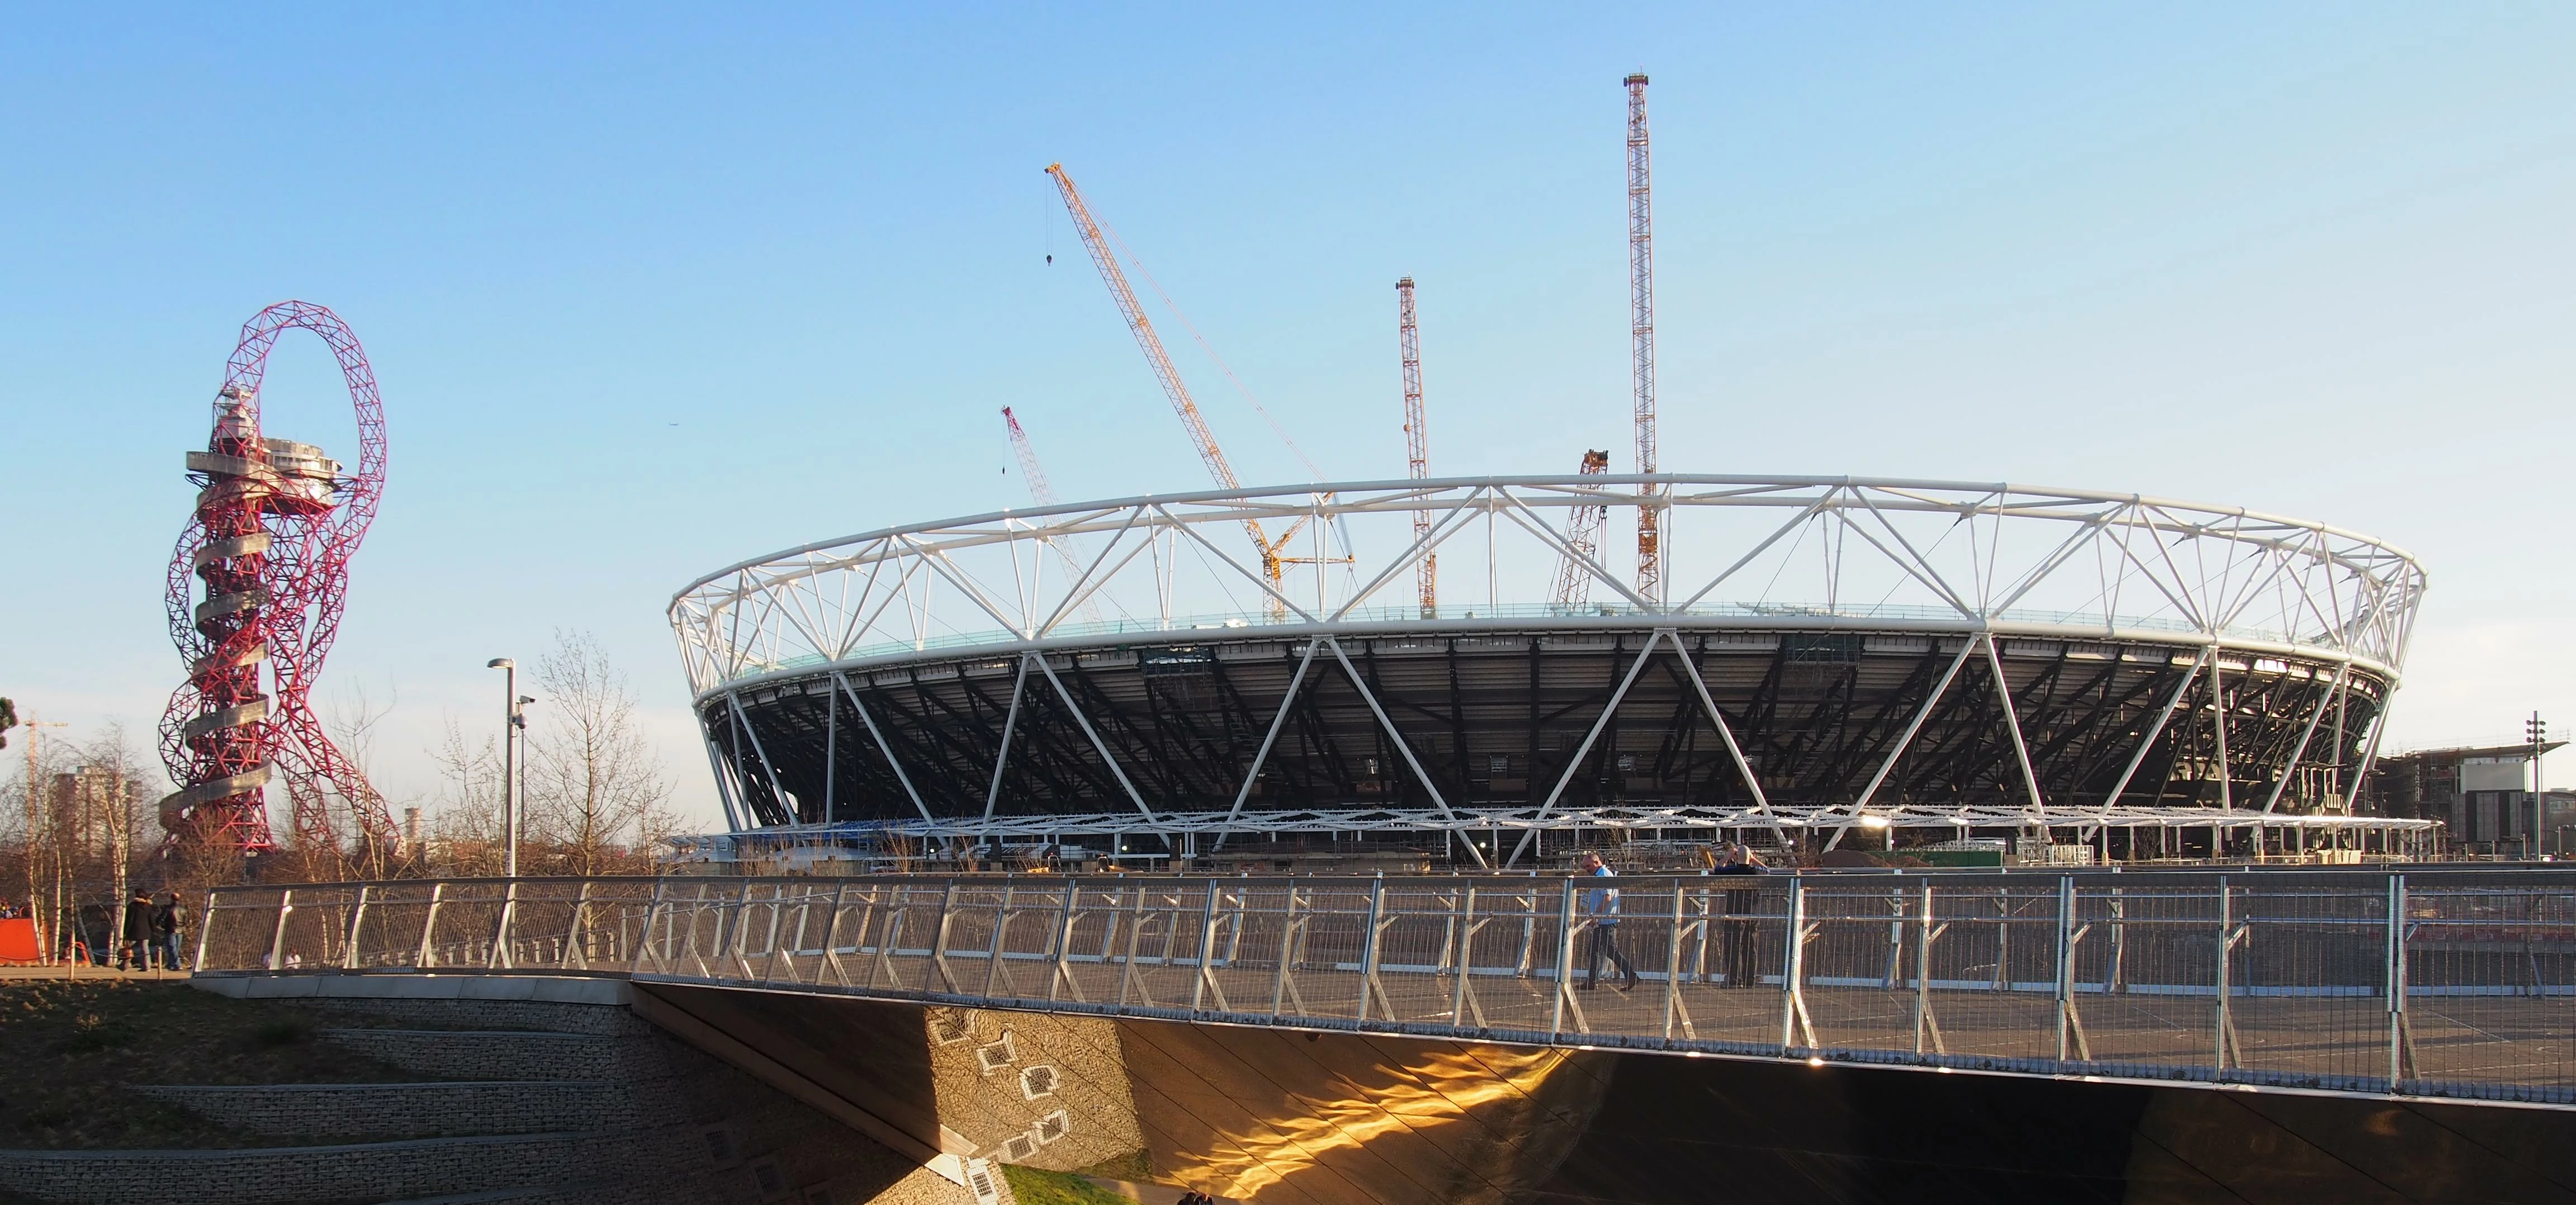 Queen Elizabeth Olympic Park: Olympic Stadium & ArcelorMittal Orbit